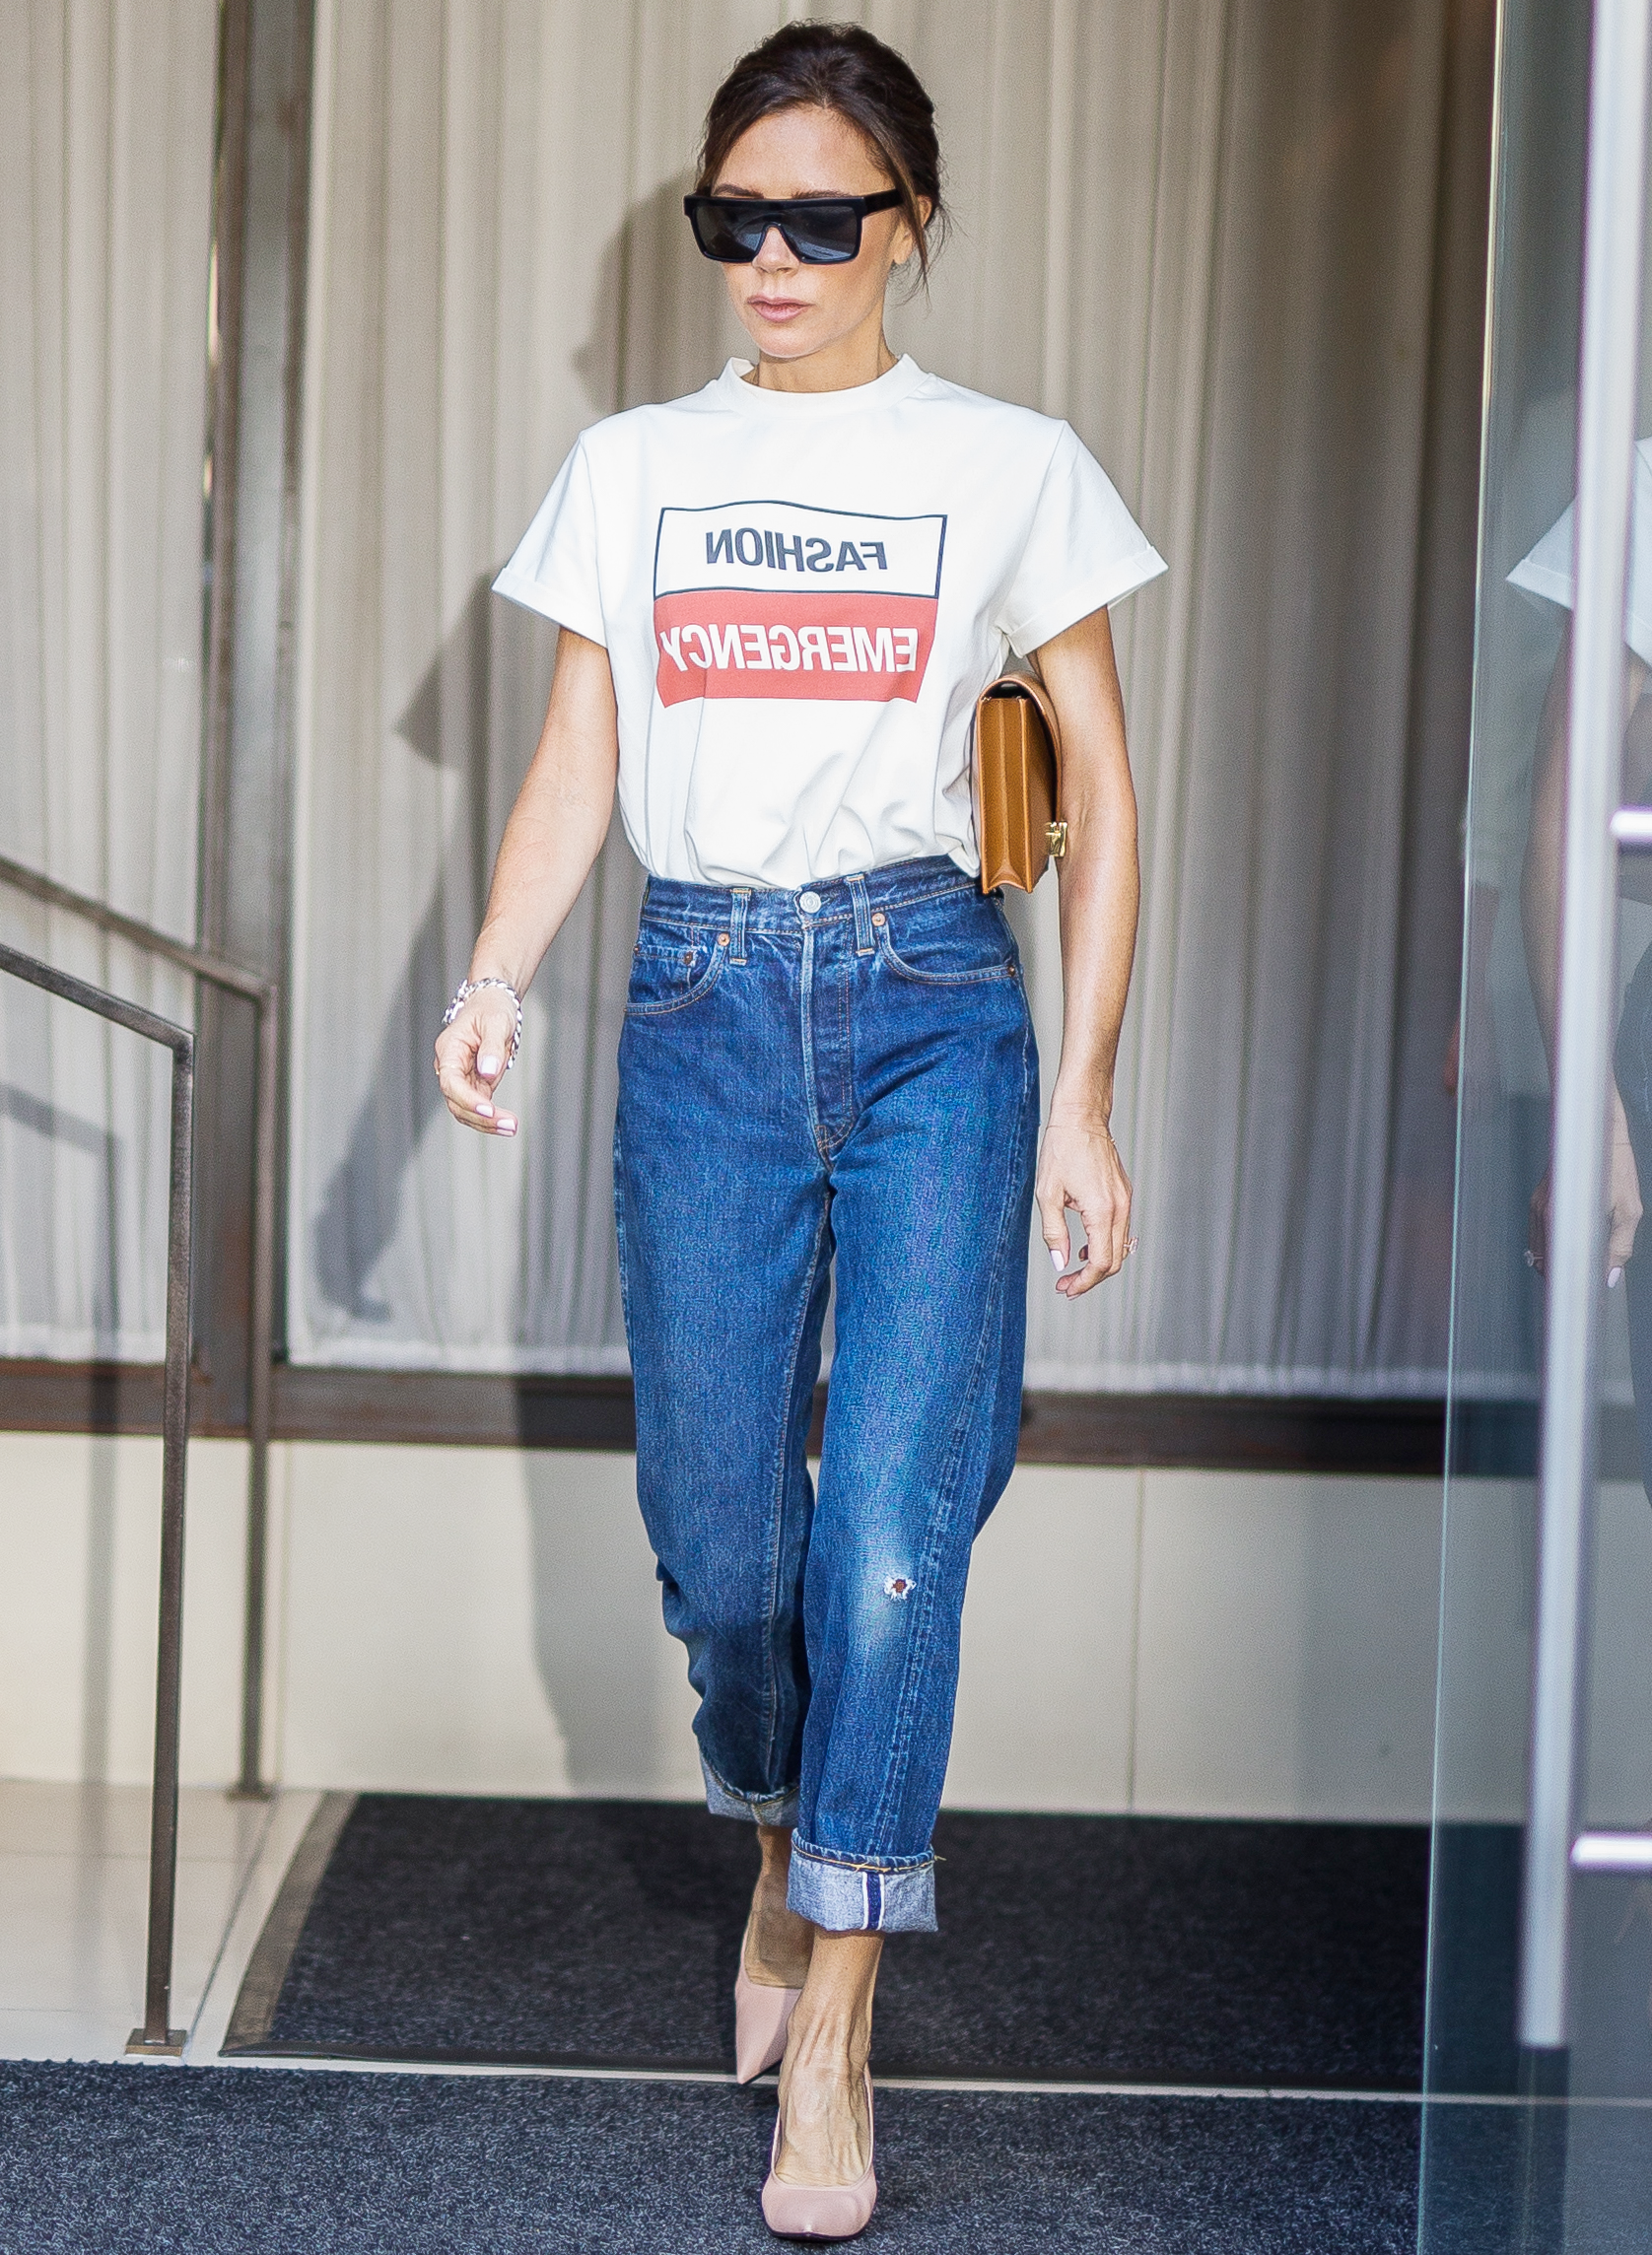 Victoria Beckham Jeans and Tee Shirt